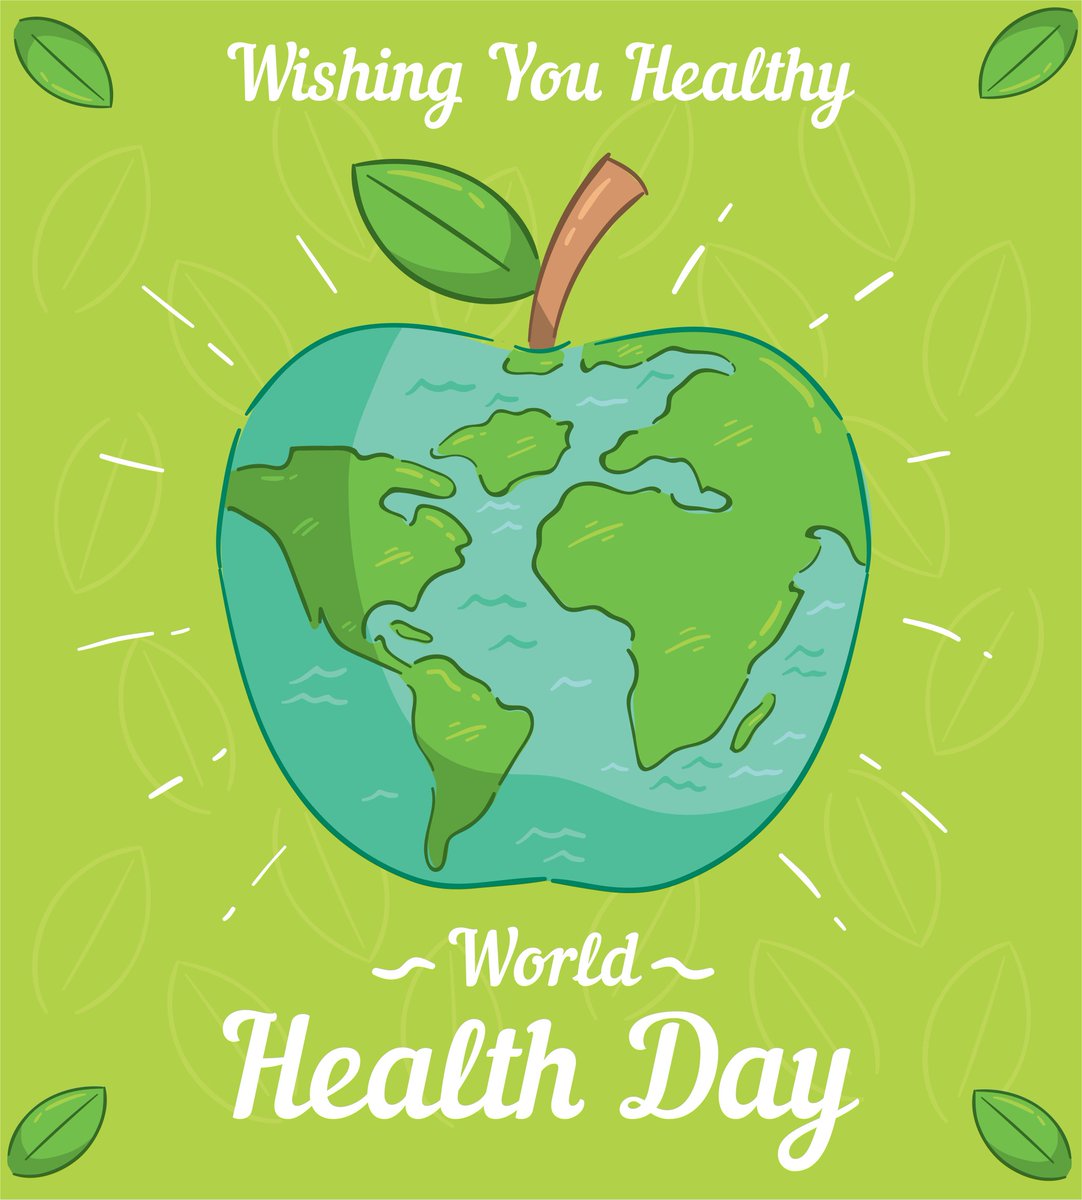 World Health Day - 7 April